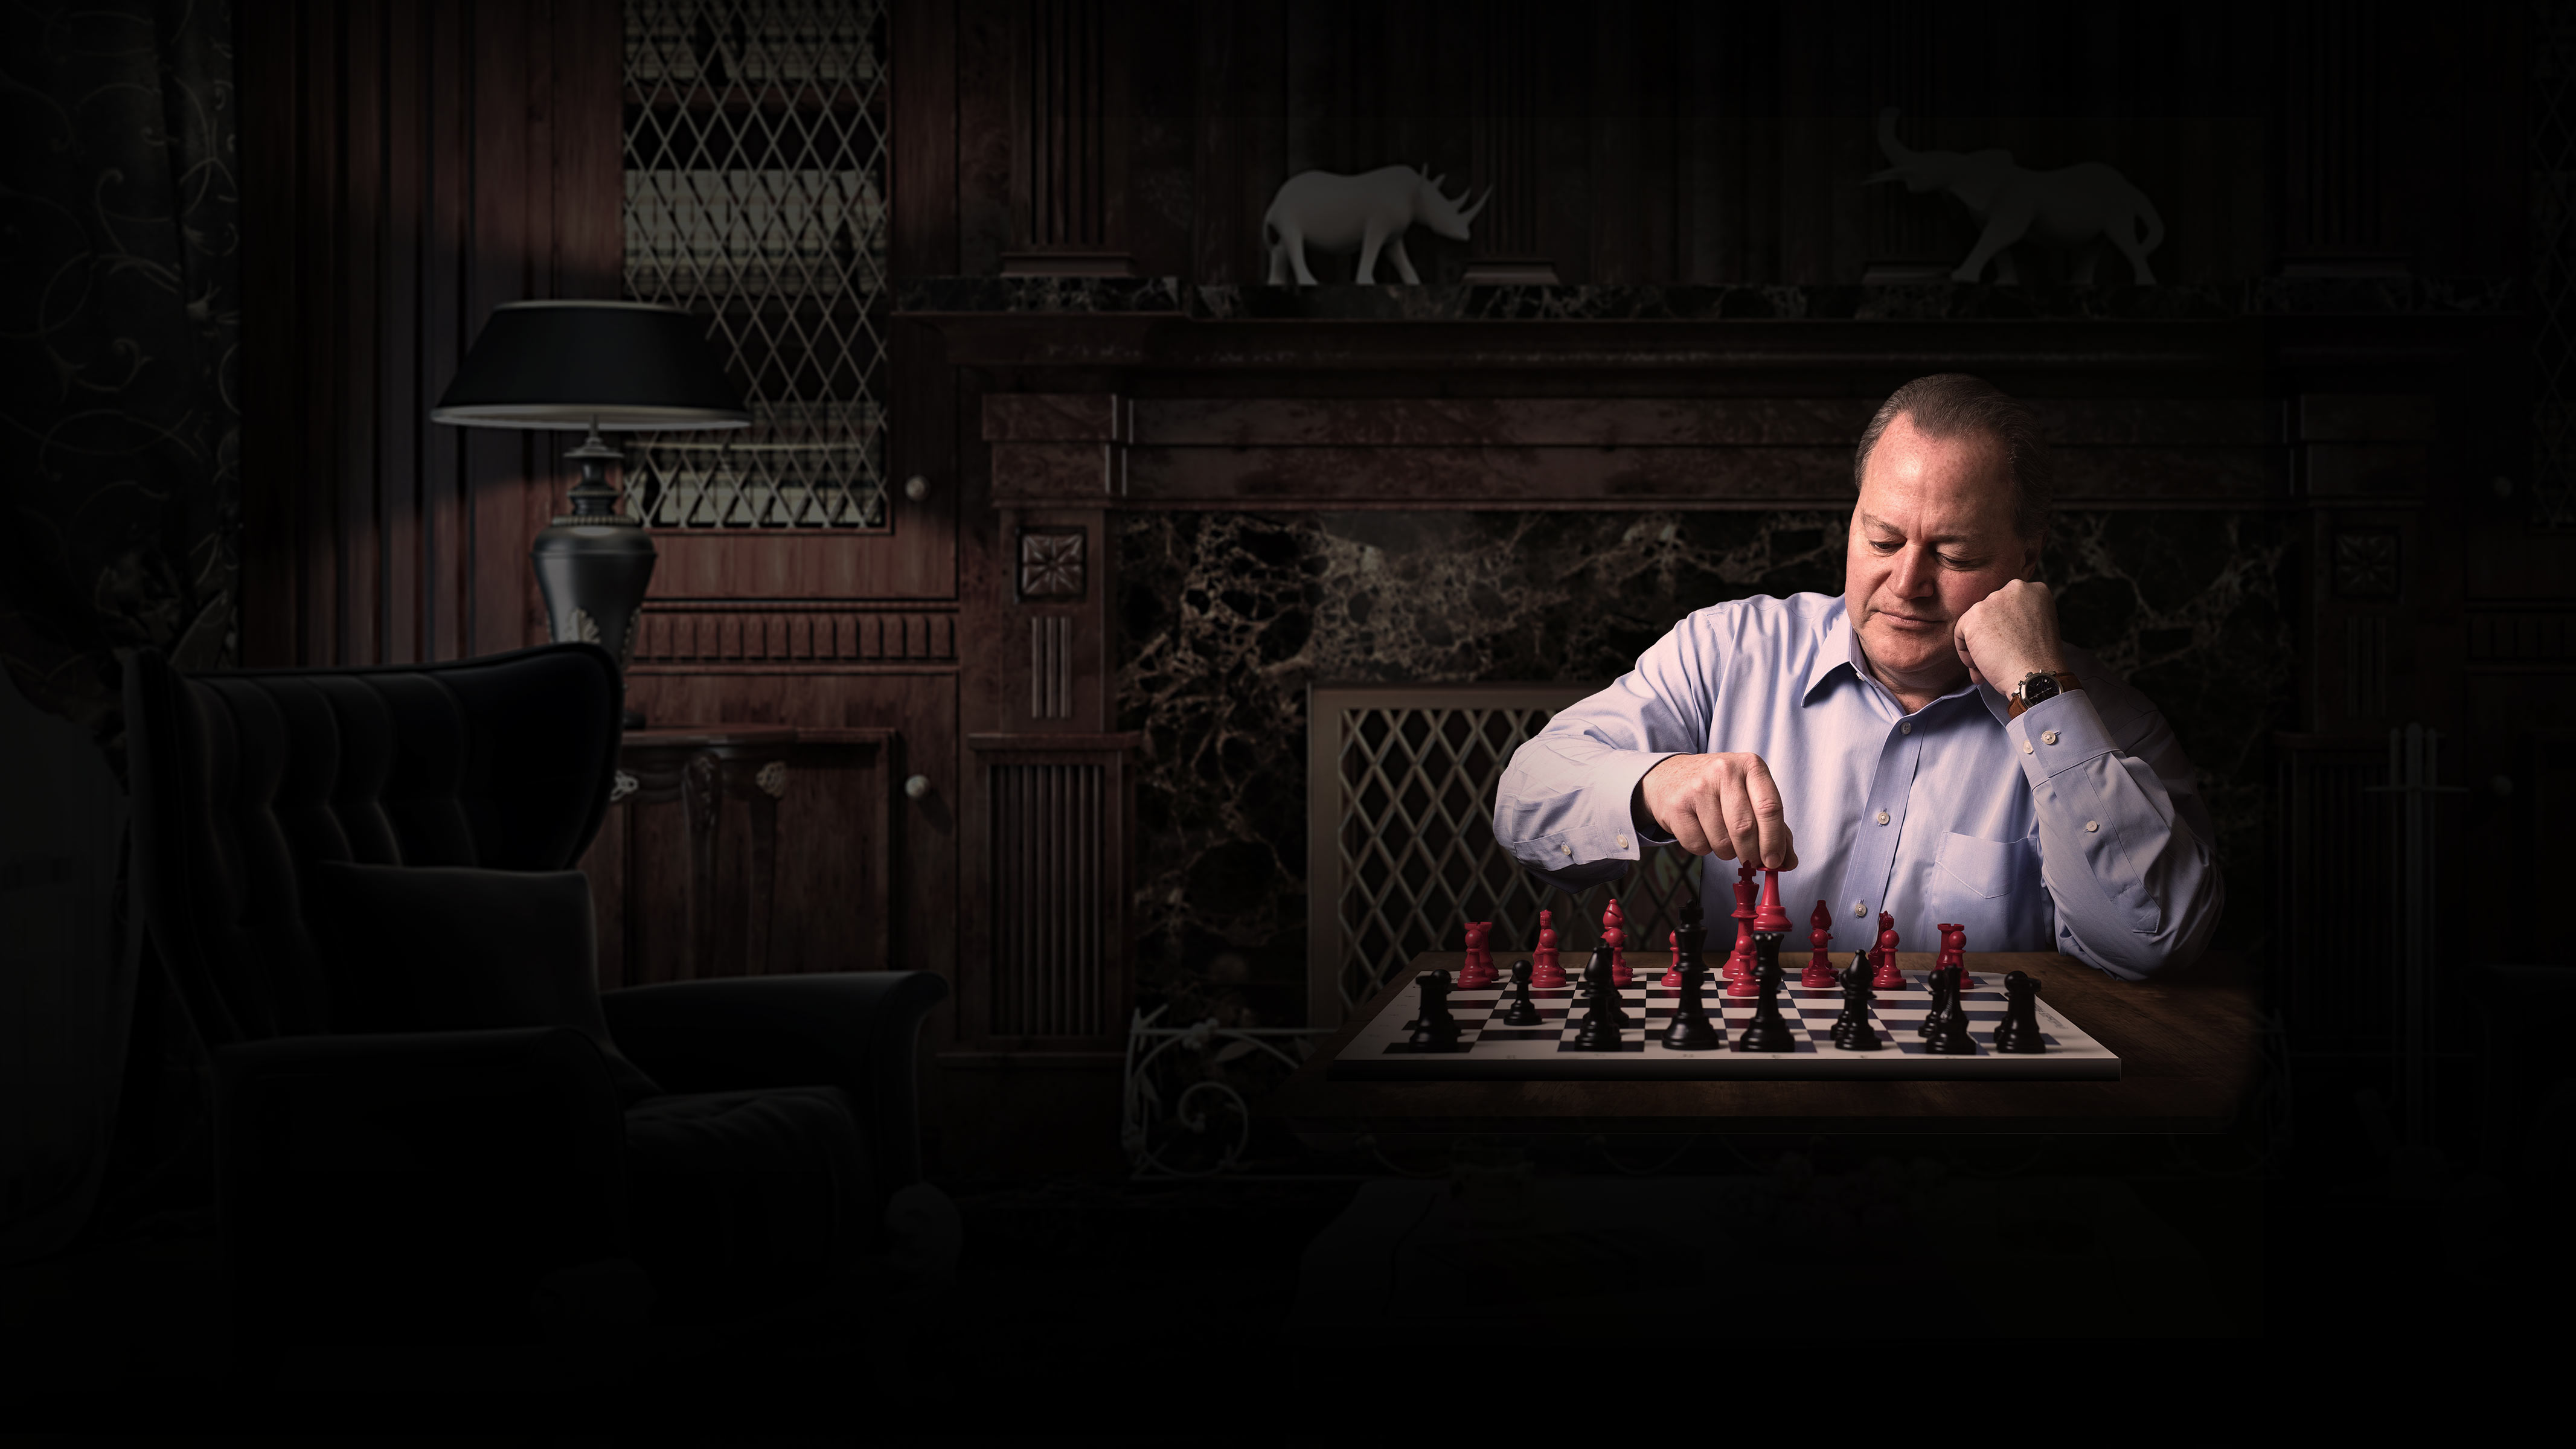 Jeff Davis, CEO, playing chess